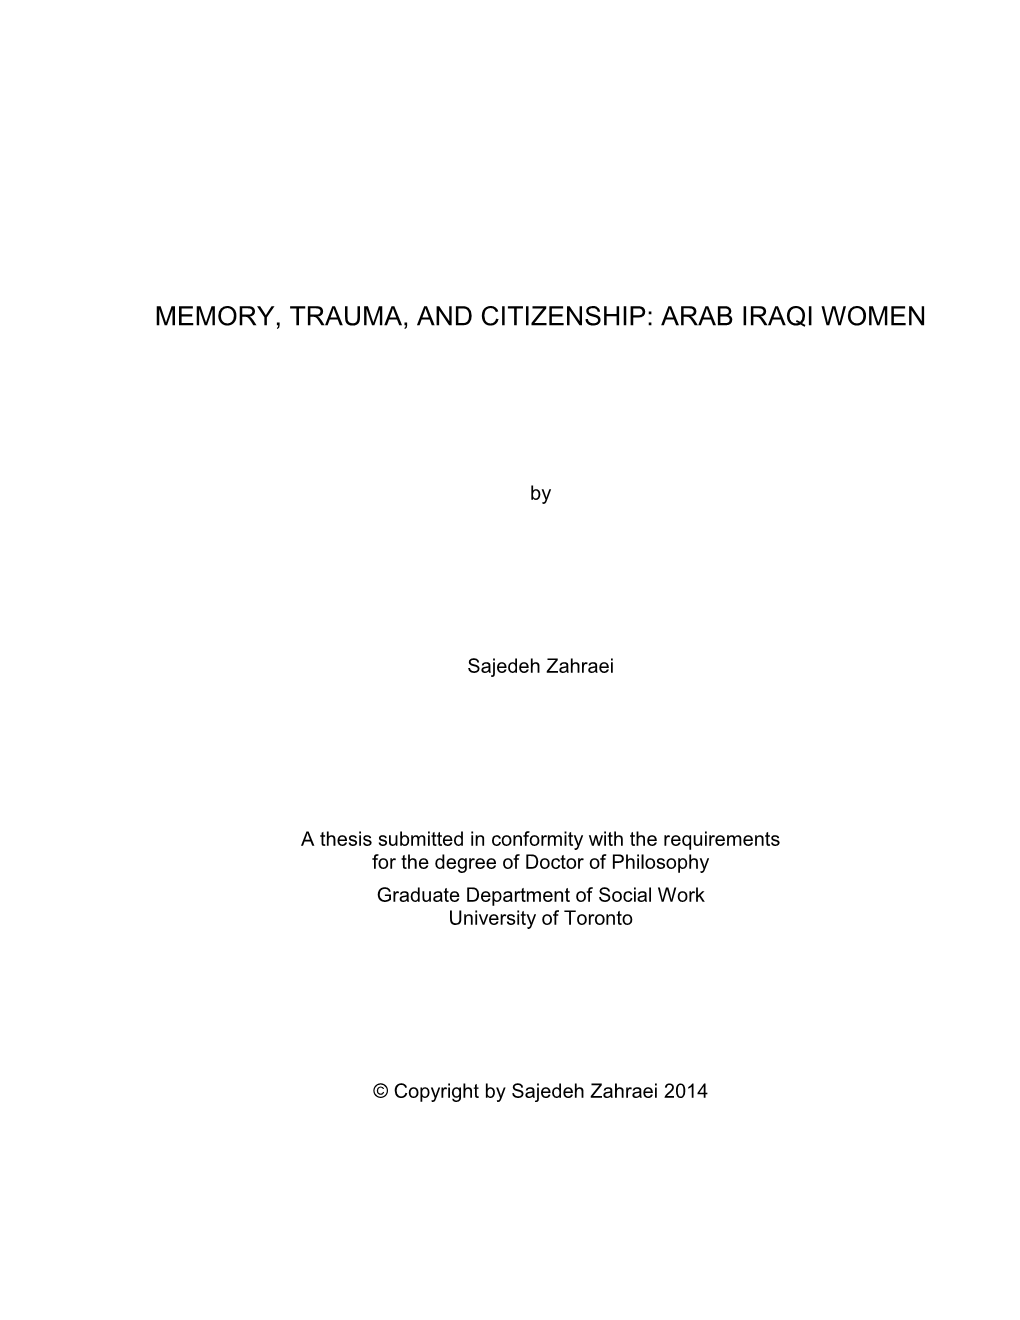 Memory, Trauma, and Citizenship: Arab Iraqi Women